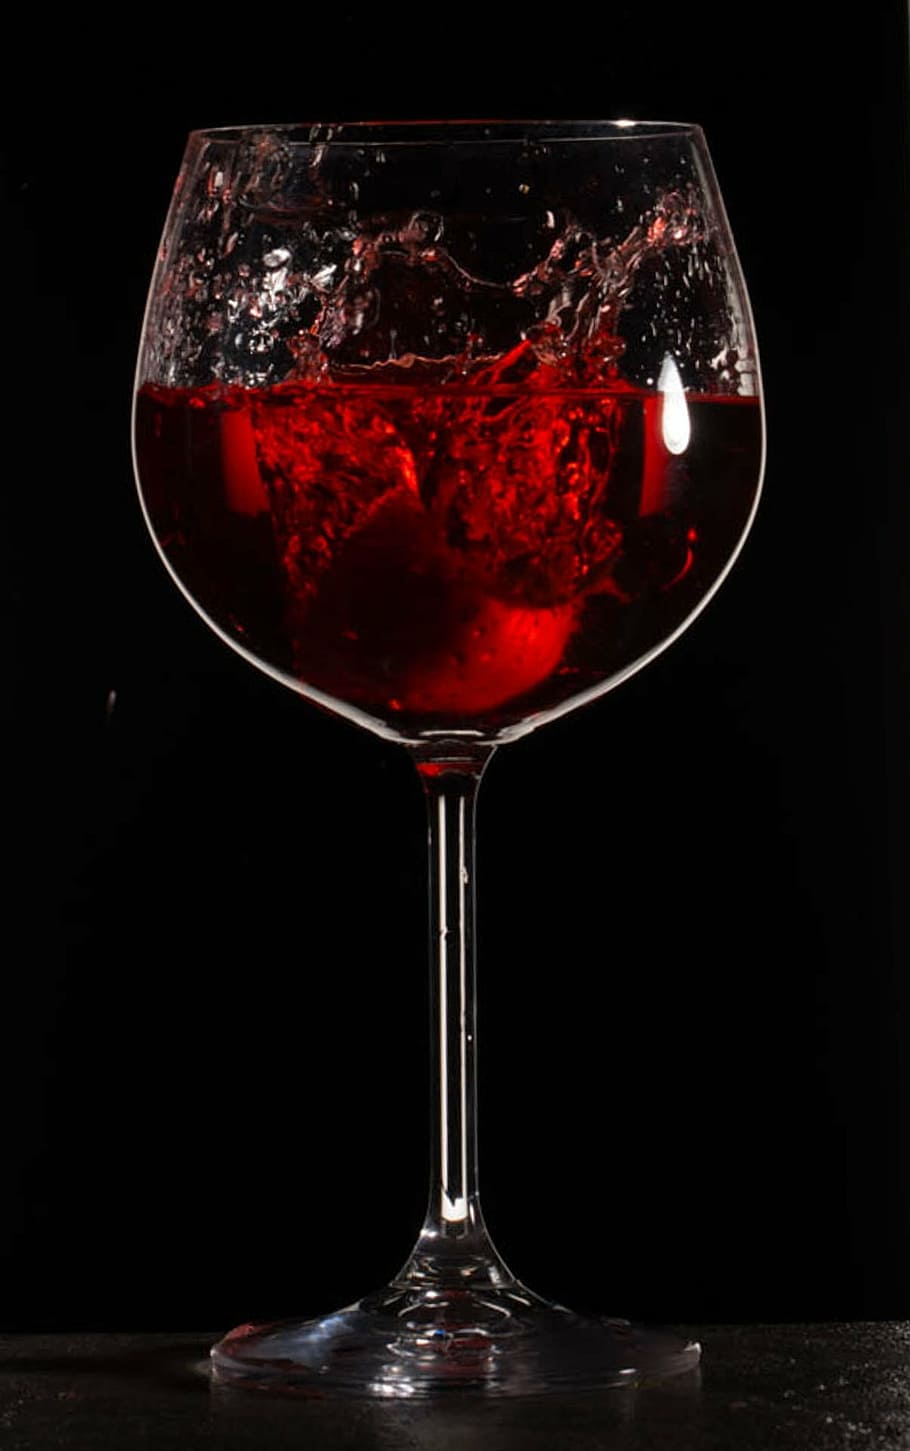 clear, long-stem wine glass, red, liquid, splash, wine, drink, glass, wineglass, splashing